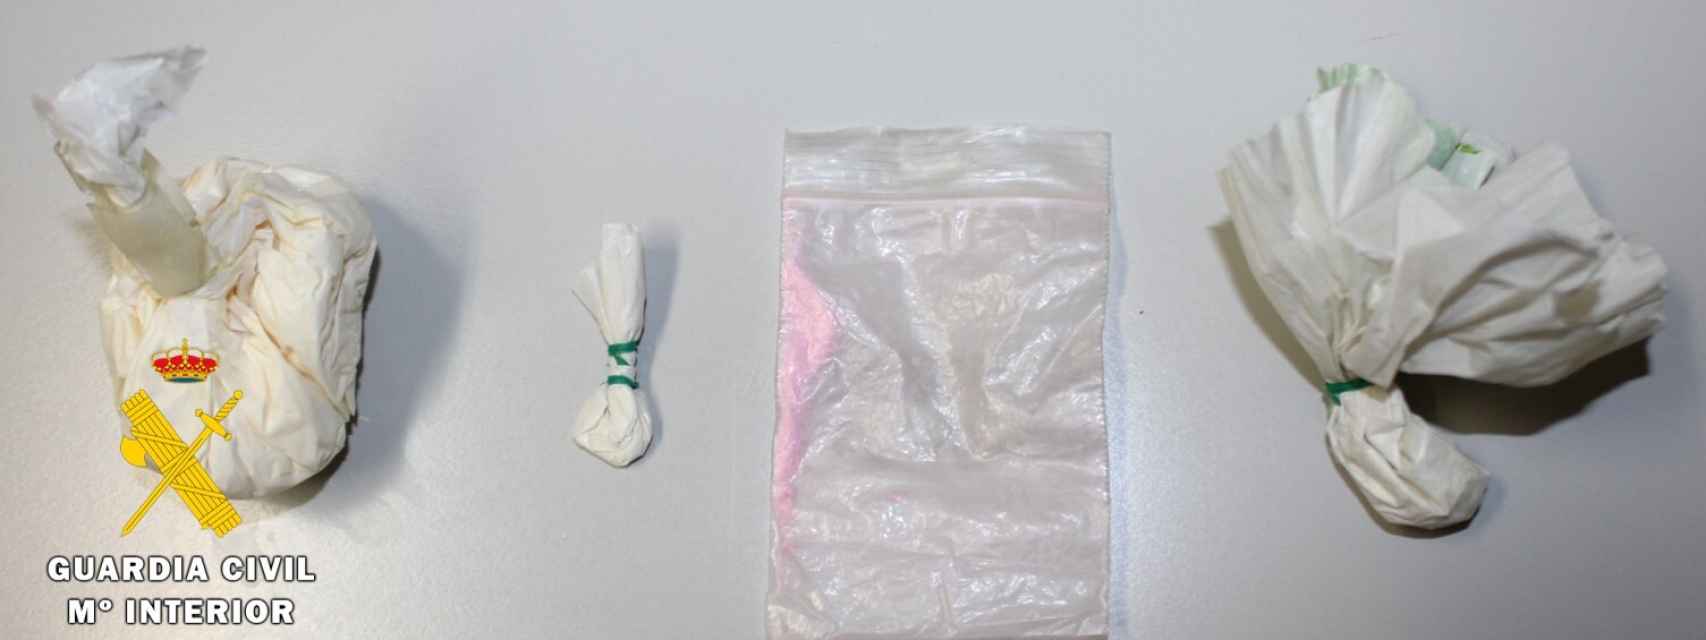 Imagen de la droga intervenida en La Demanda facilitada por la Guardia Civil